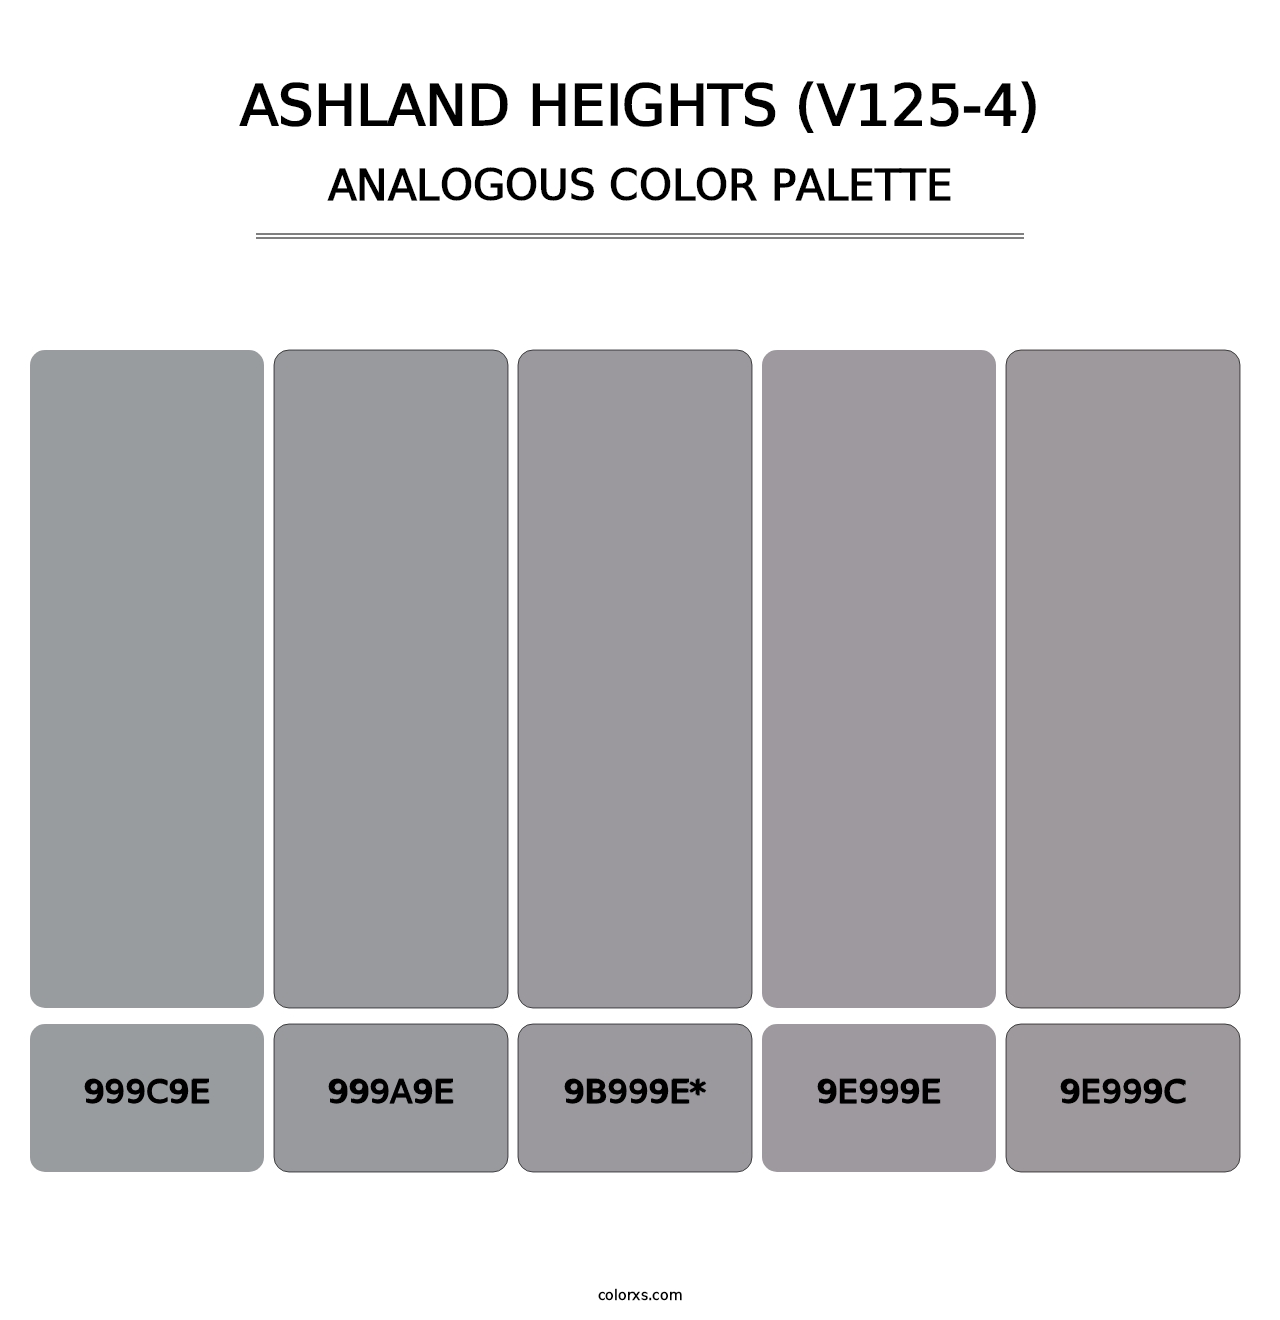 Ashland Heights (V125-4) - Analogous Color Palette